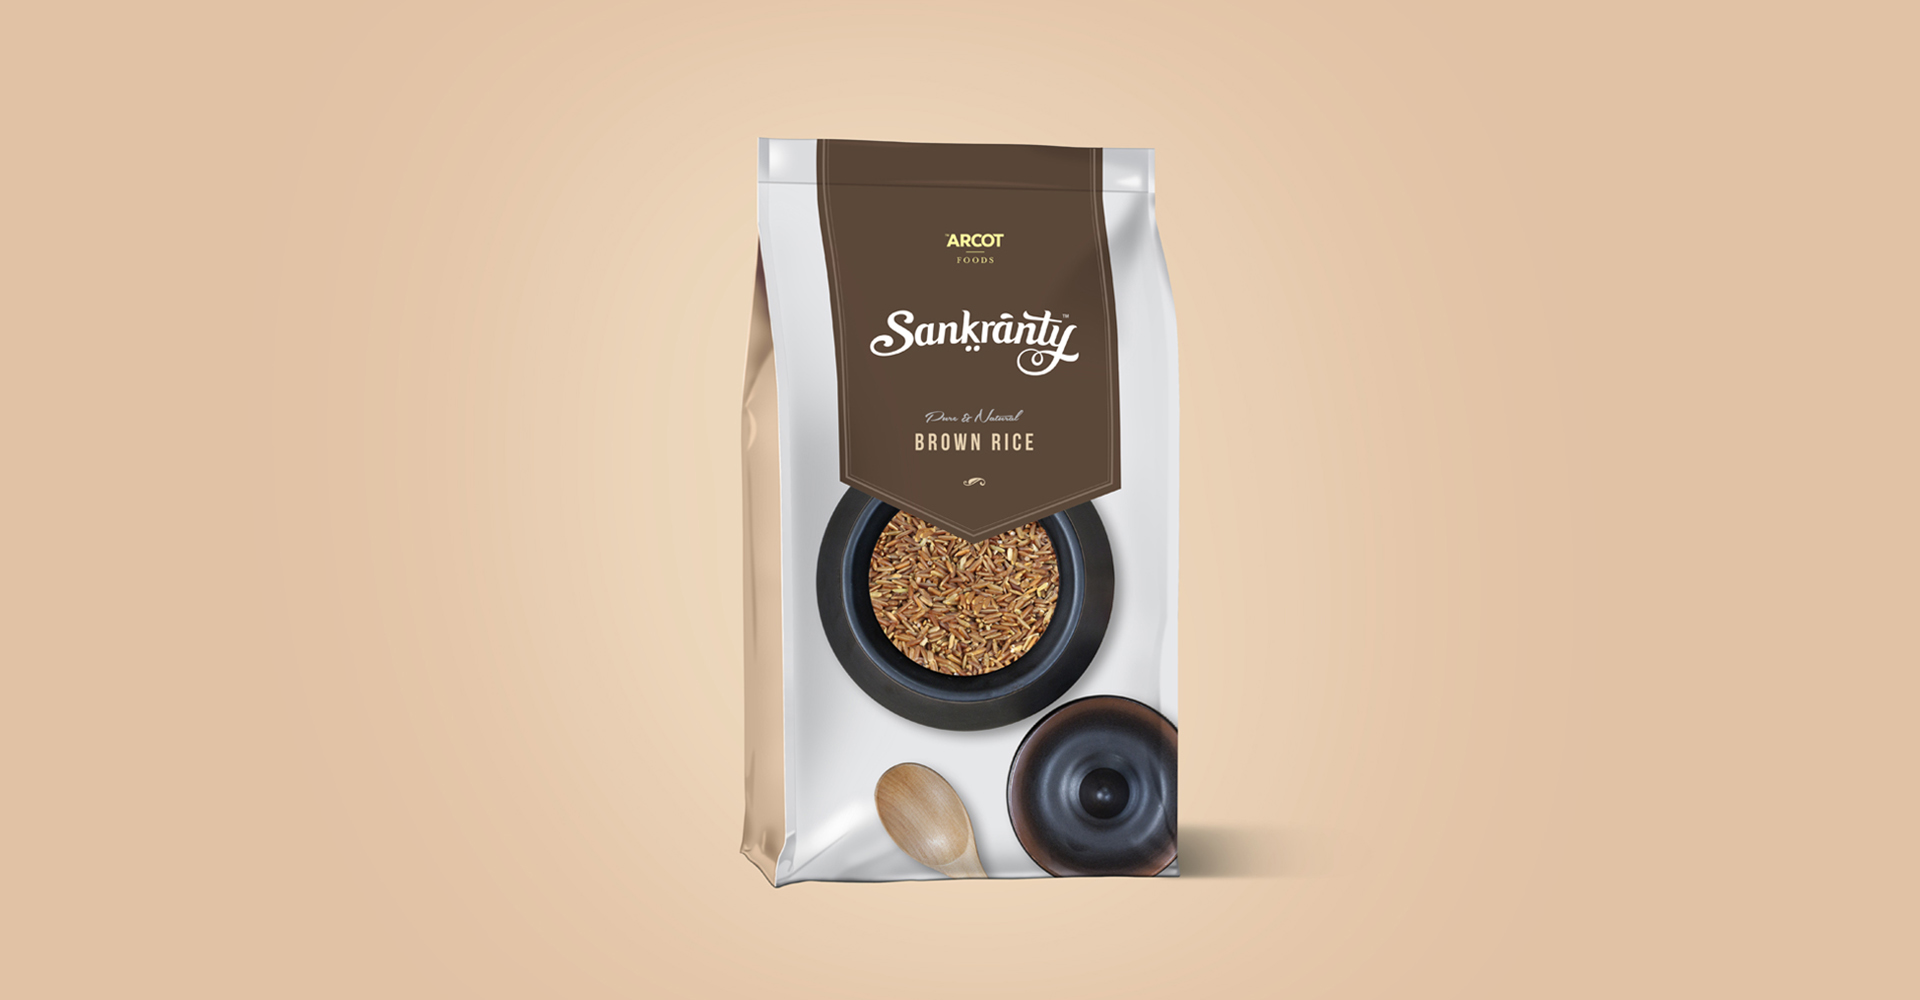 Sankranty packaging design: Brownrice